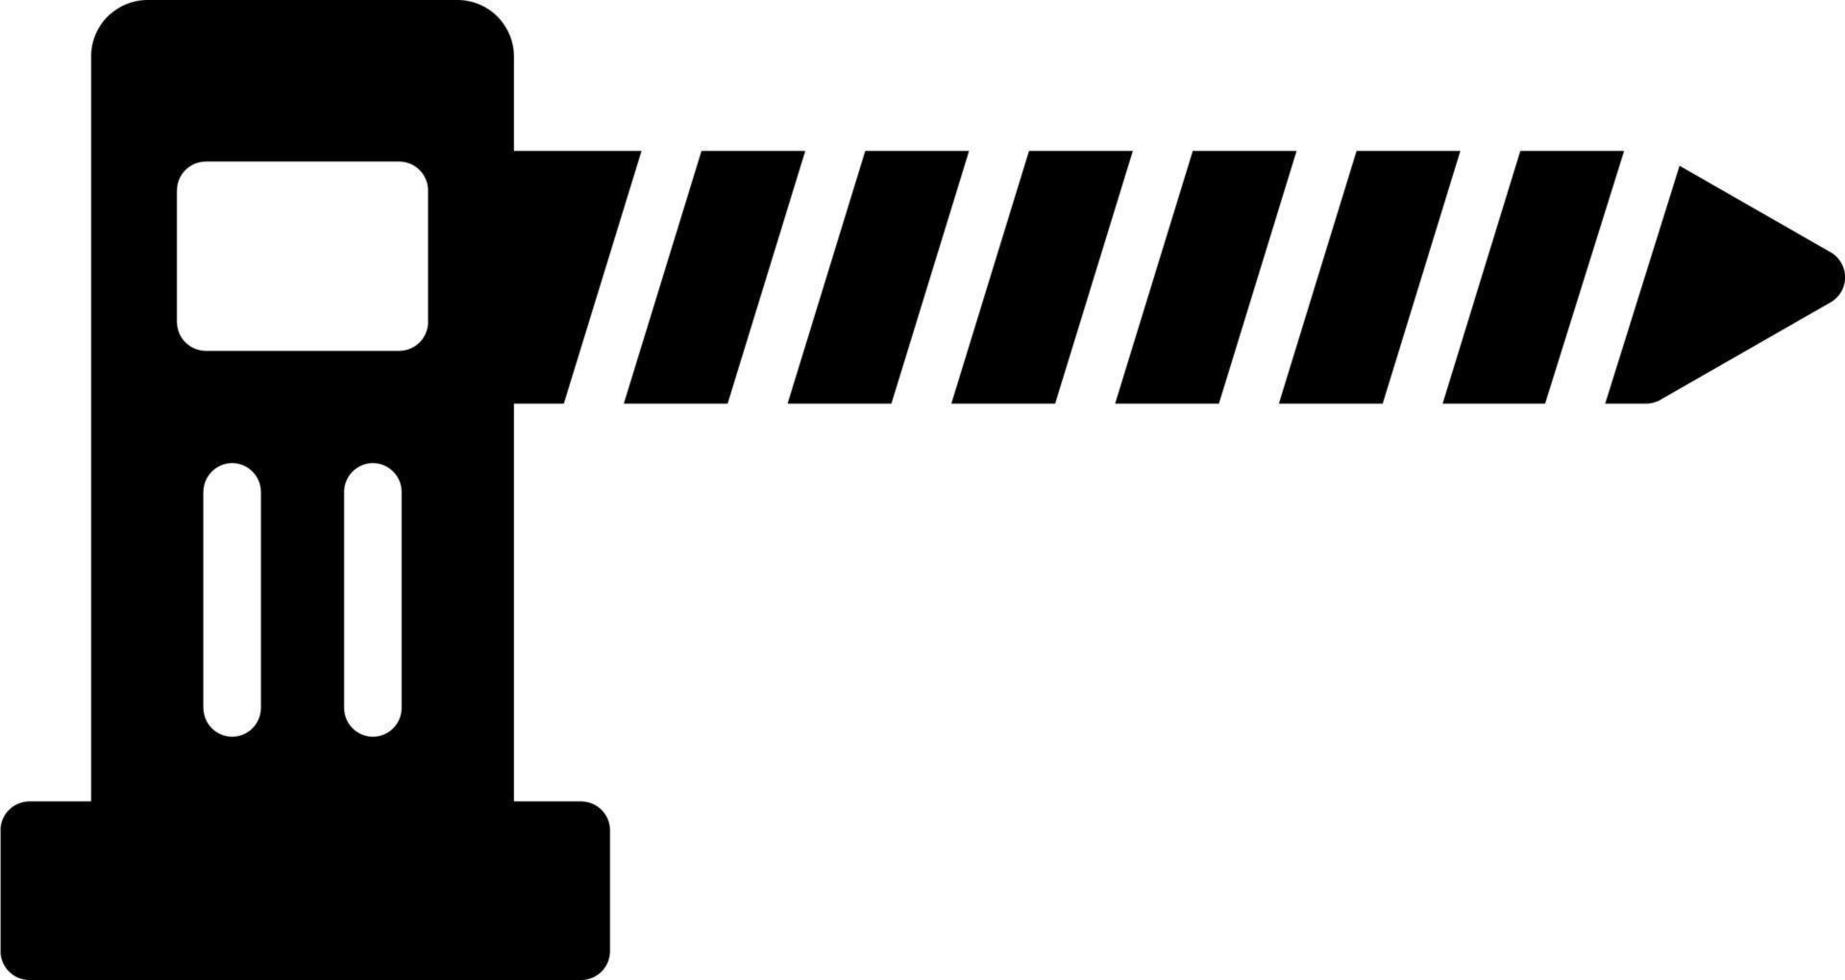 Barrier Vector Icon